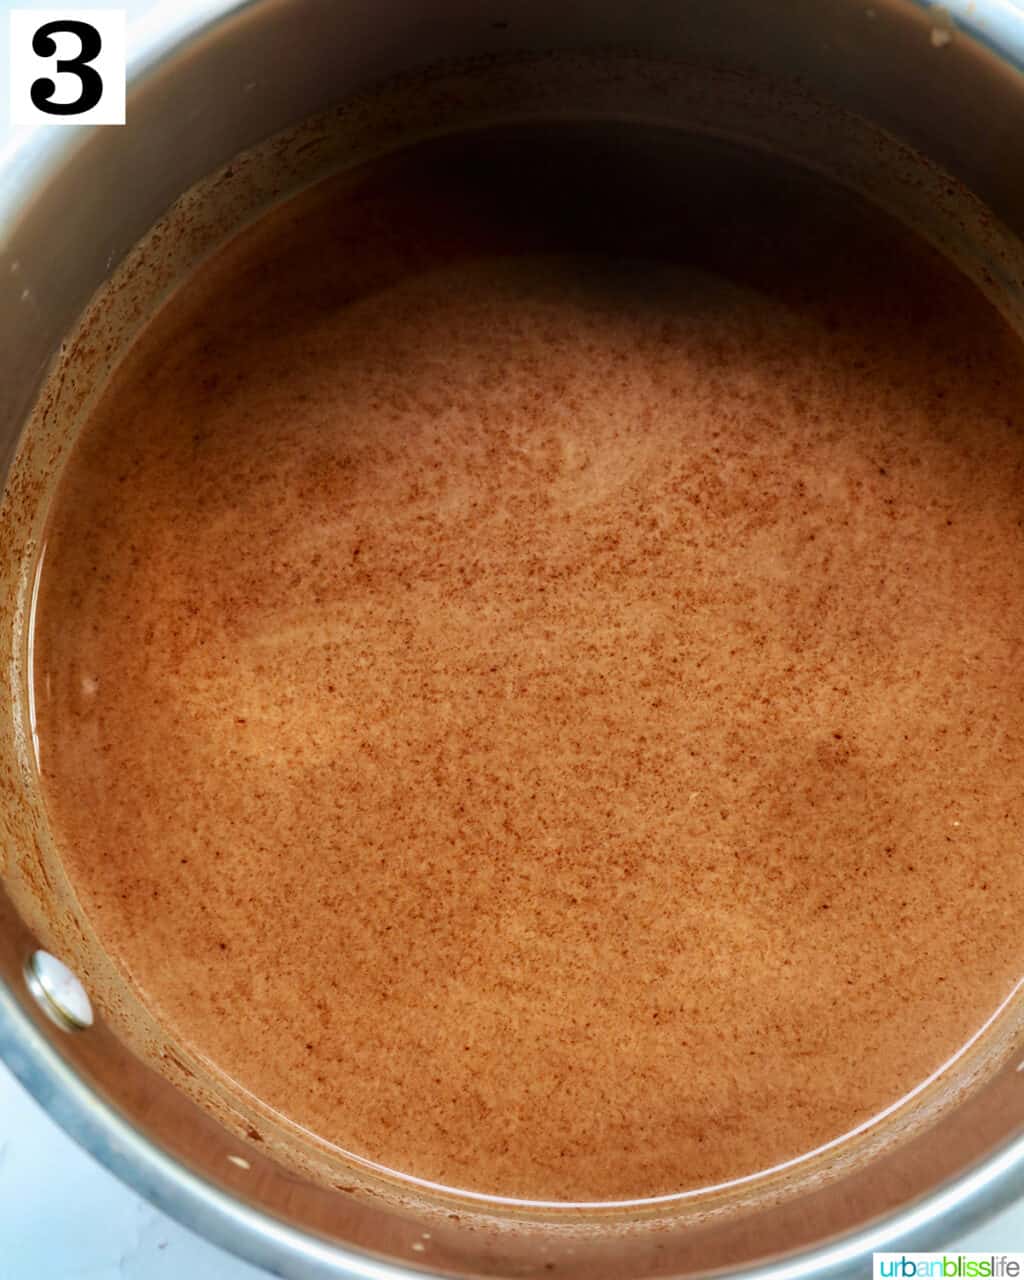 hot chocolate mixture in a saucepan.